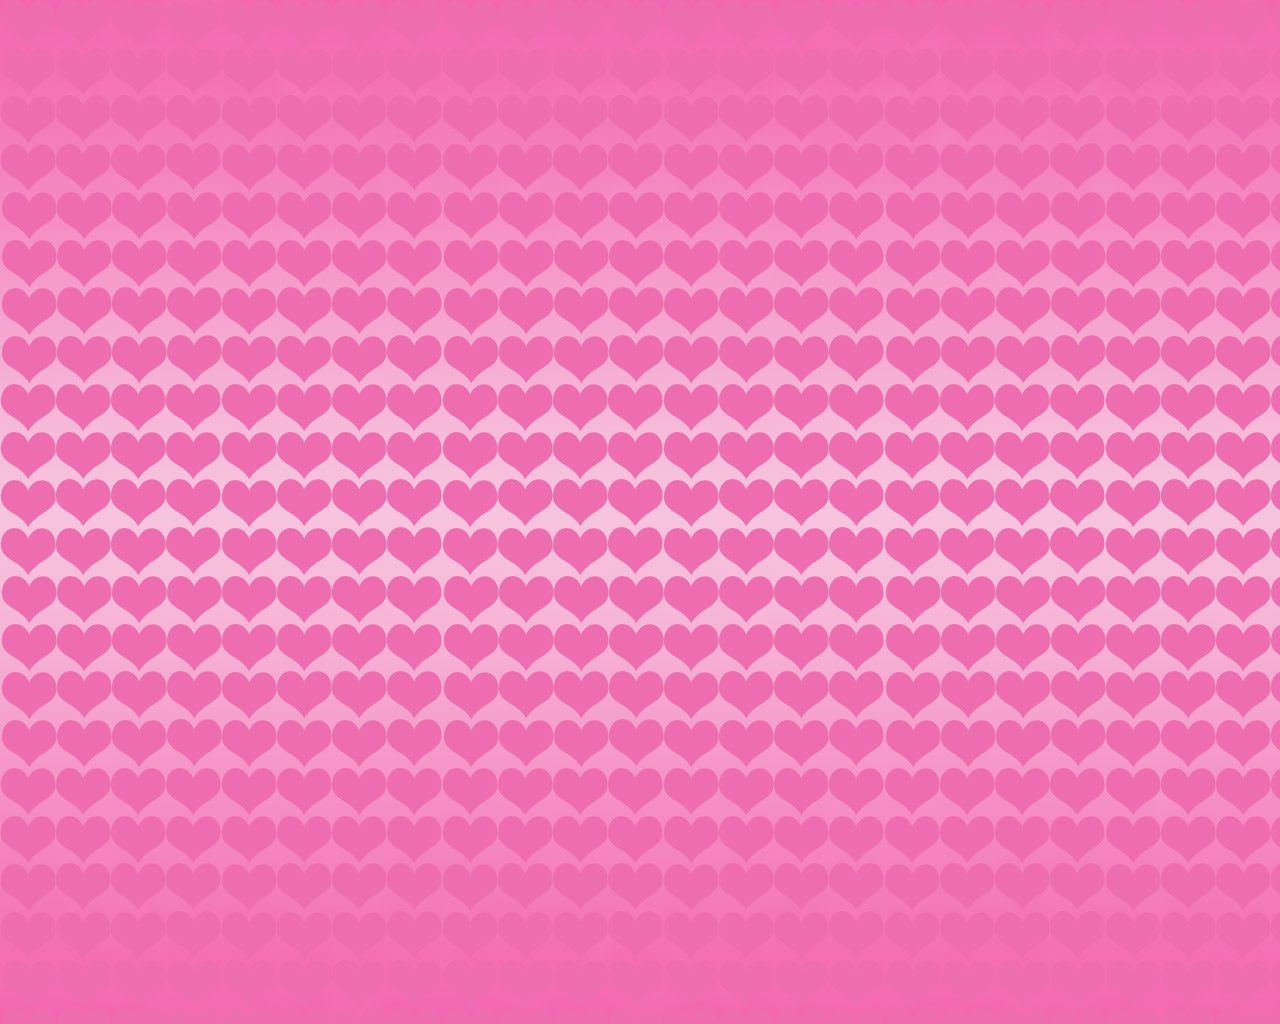 Girly Patterns Background Pink Desktop Wallpaper Pattern